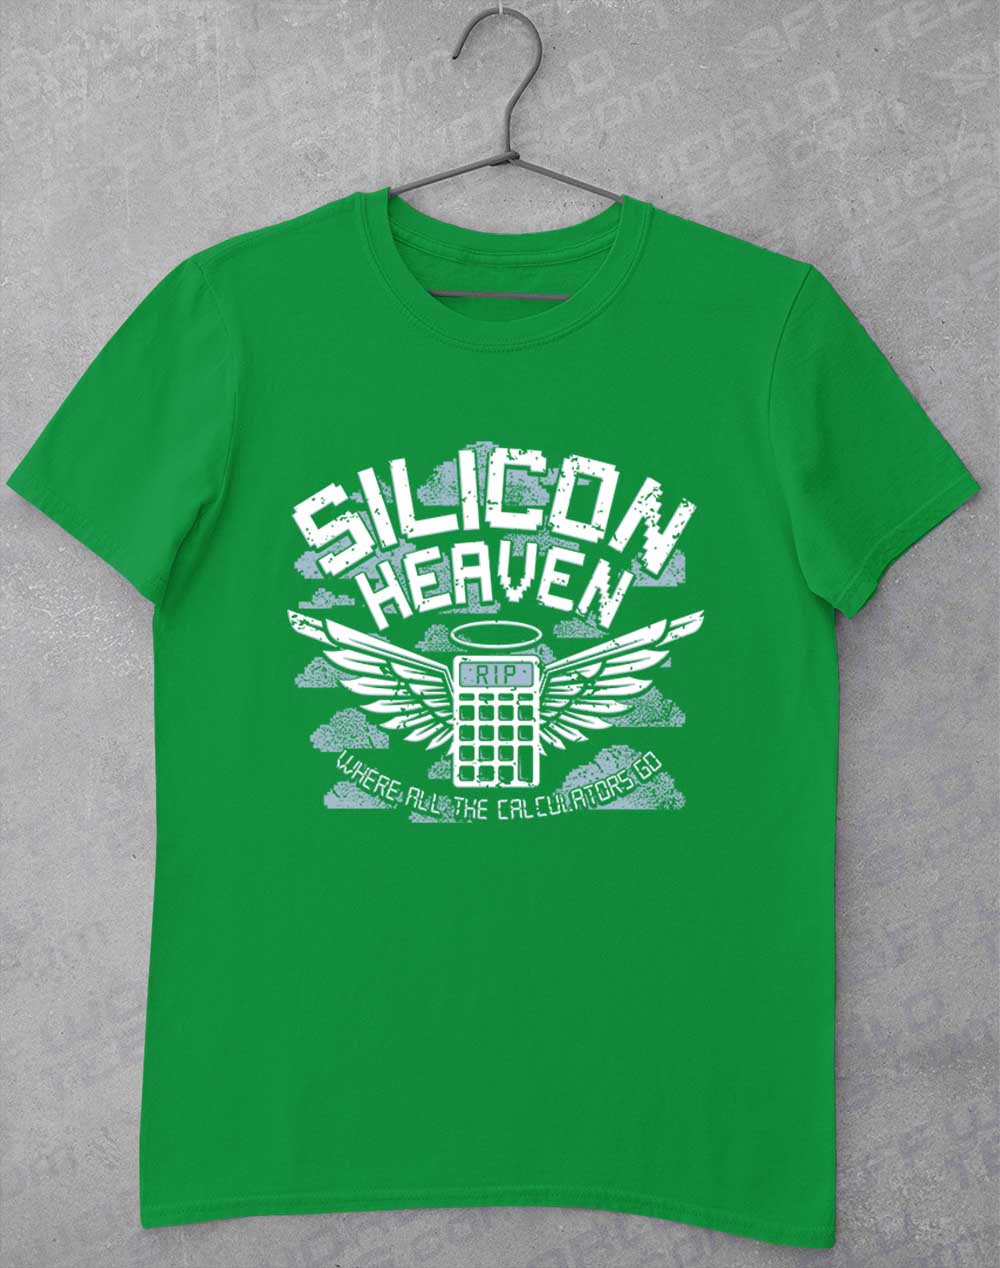 Irish Green - Silicon Heaven T-Shirt